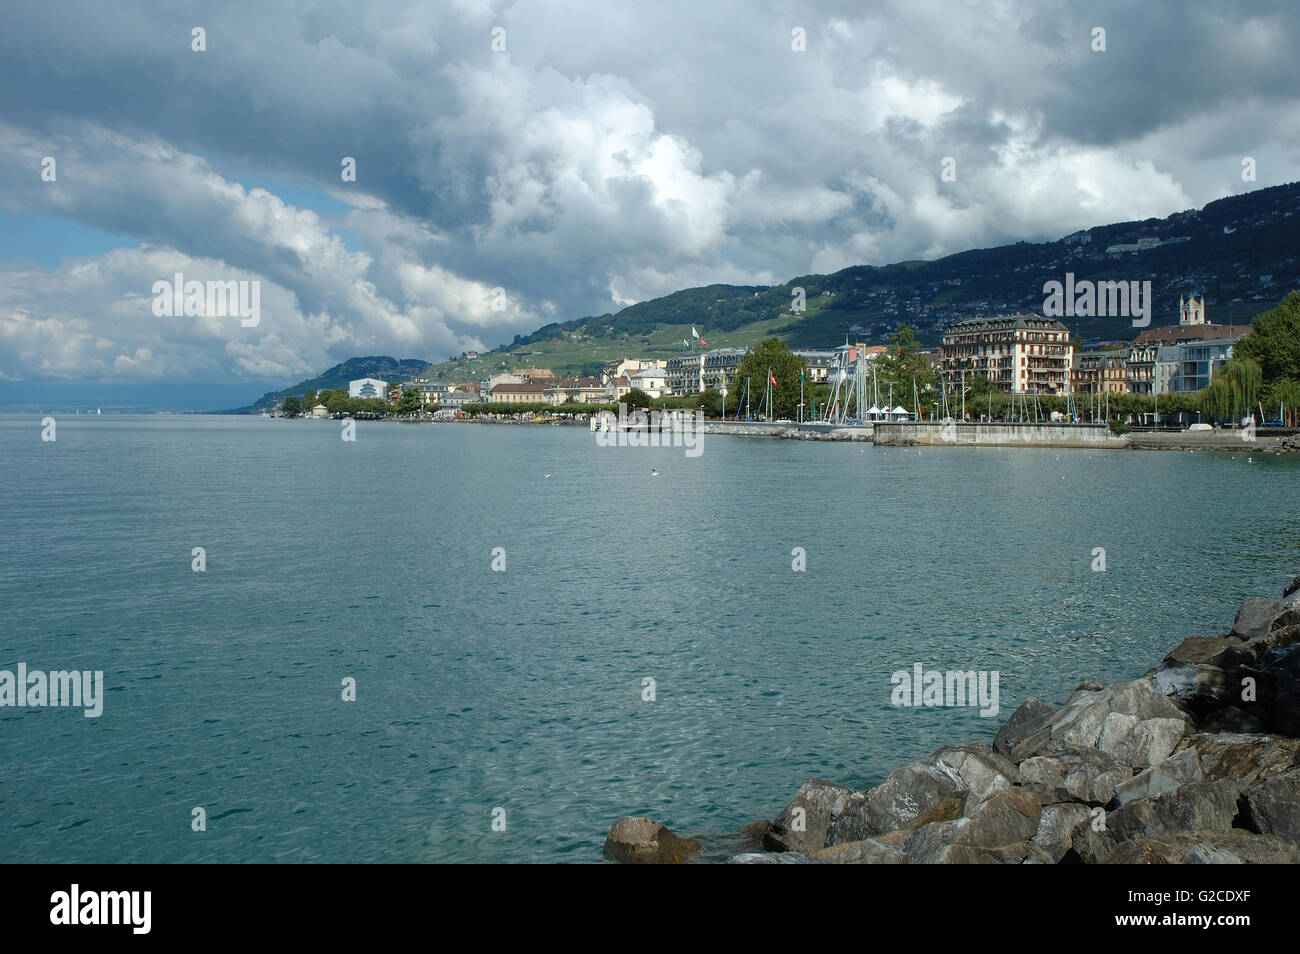 Vevey, Switzerland - August 16, 2014: Buildings in Vevey at Geneve lake in Switzerland Stock Photo